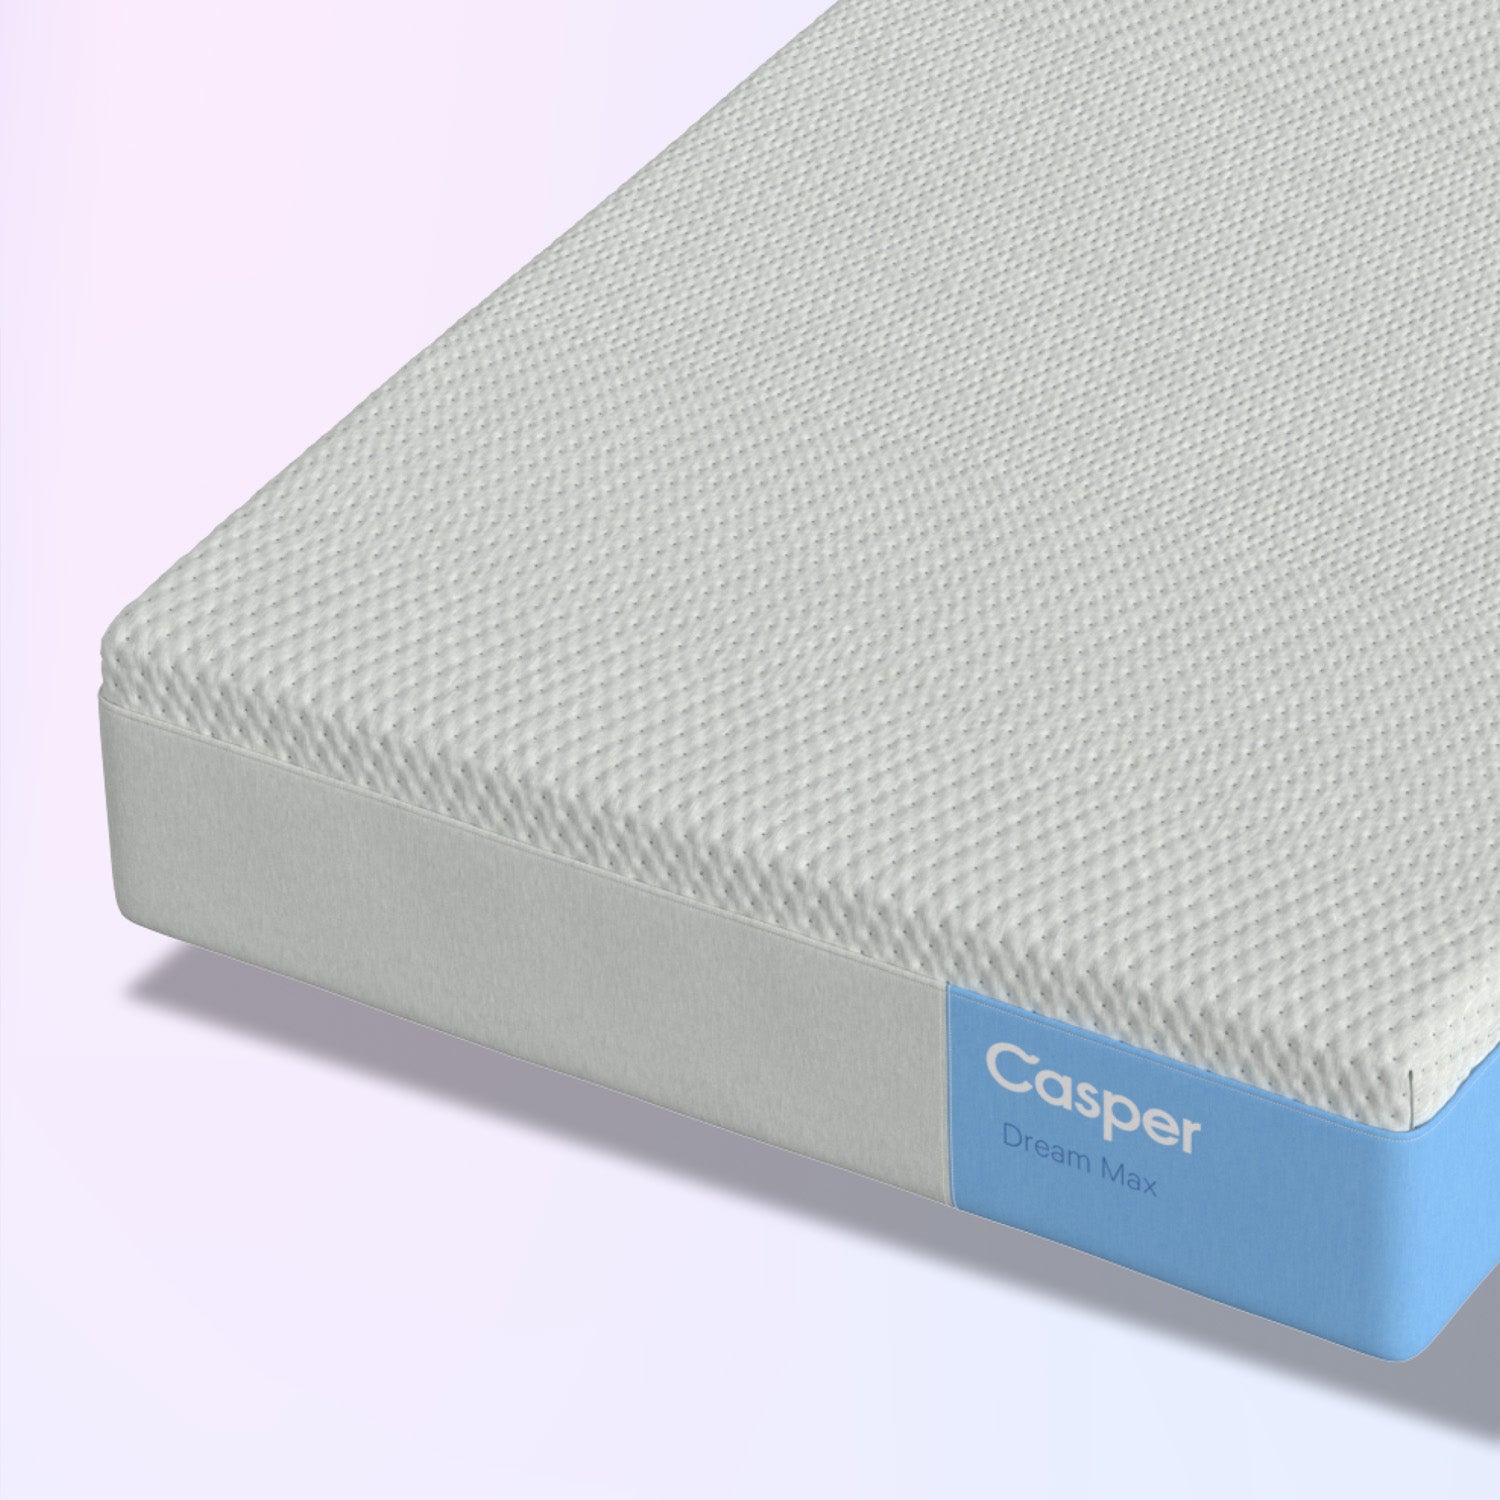 Casper Dream Max Hybrid Mattress